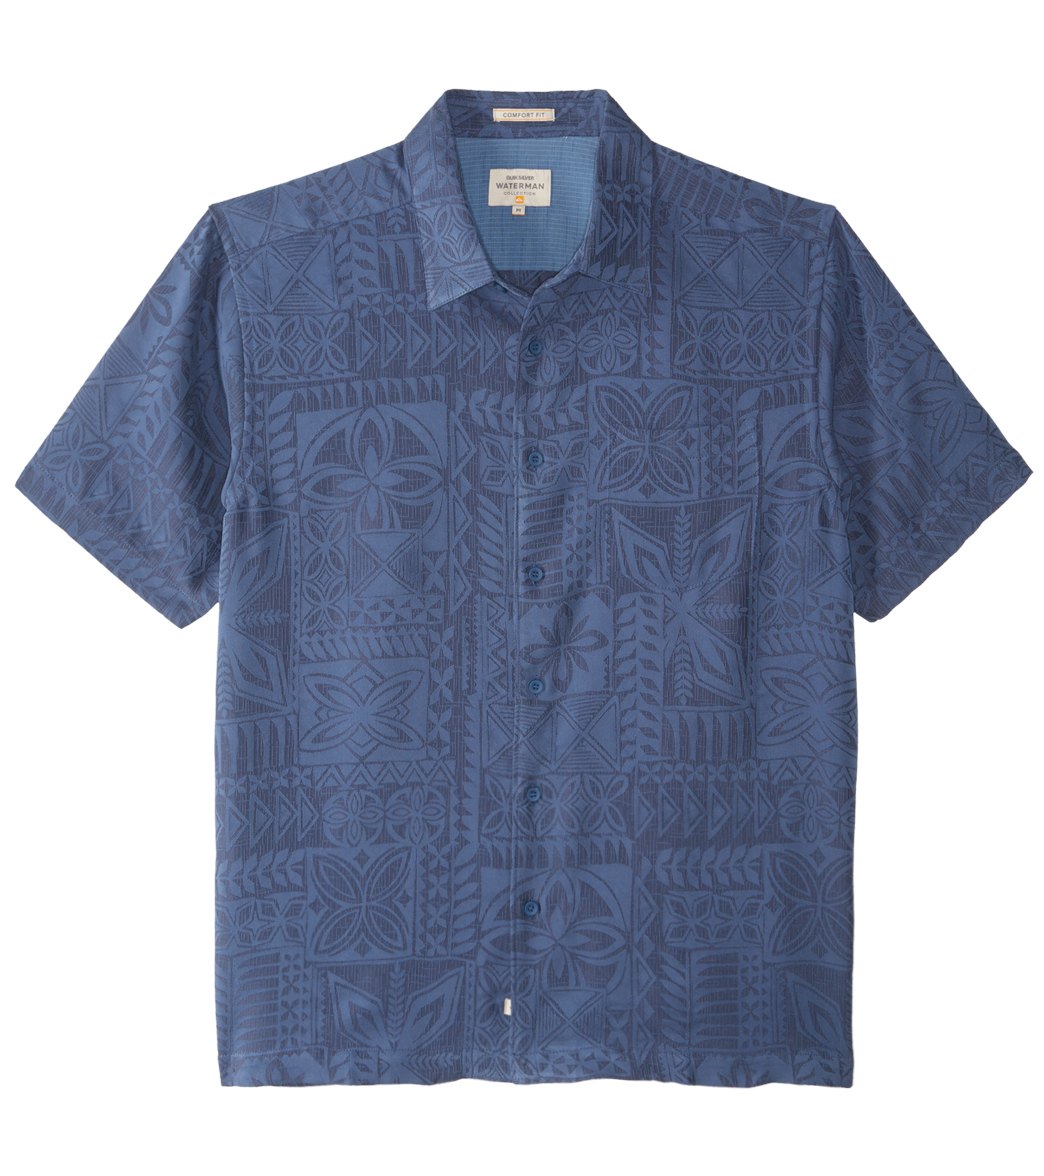 Quiksilver Waterman's Aganoa Bay 4 Short Sleeve Shirt - Scuba Small Polyester - Swimoutlet.com